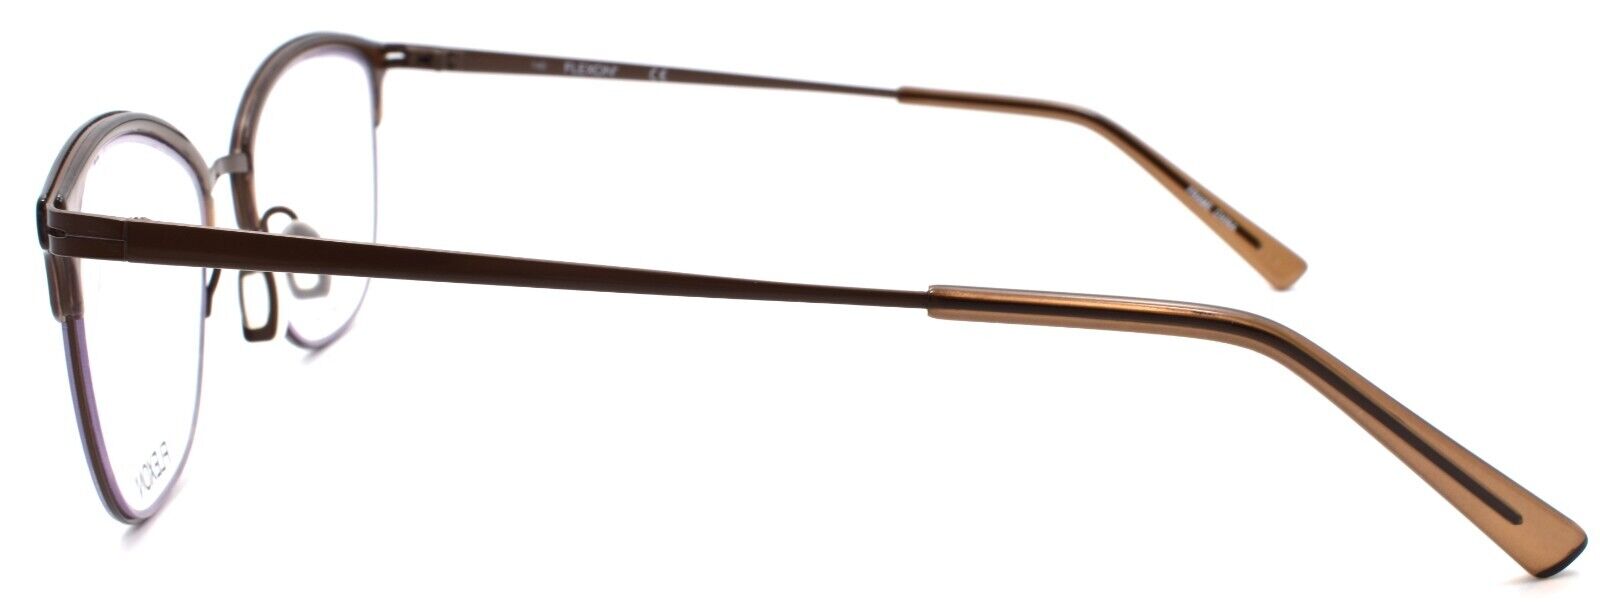 3-Flexon W3023 210 Women's Eyeglasses Frames Brown 52-20-140 Flexible Titanium-883900205344-IKSpecs